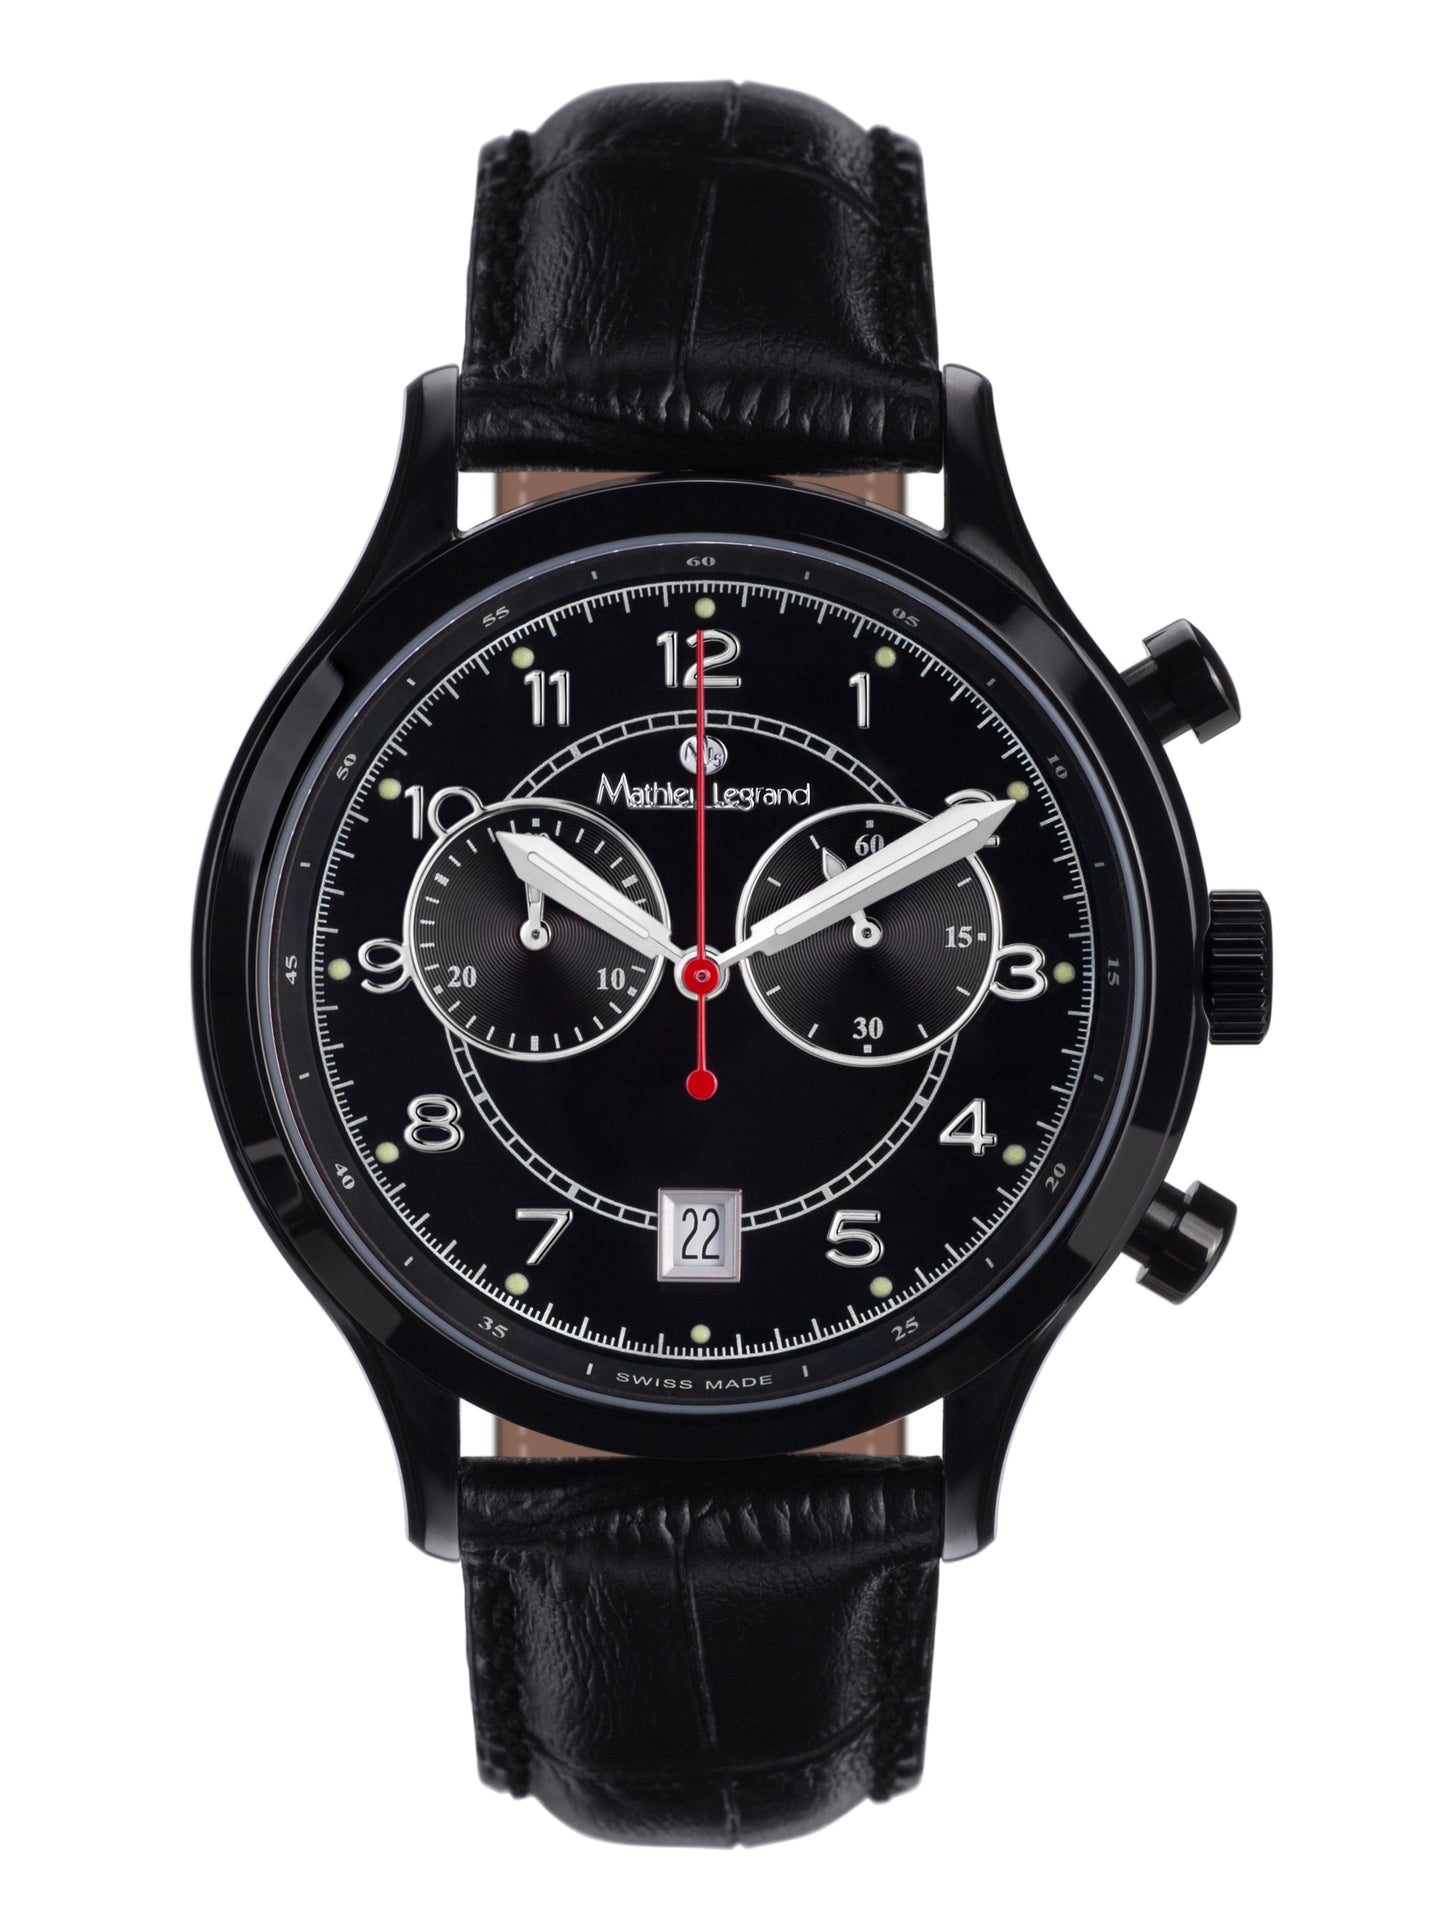 Automatic watches — Orbite Polaire — Mathieu Legrand — black IP leather